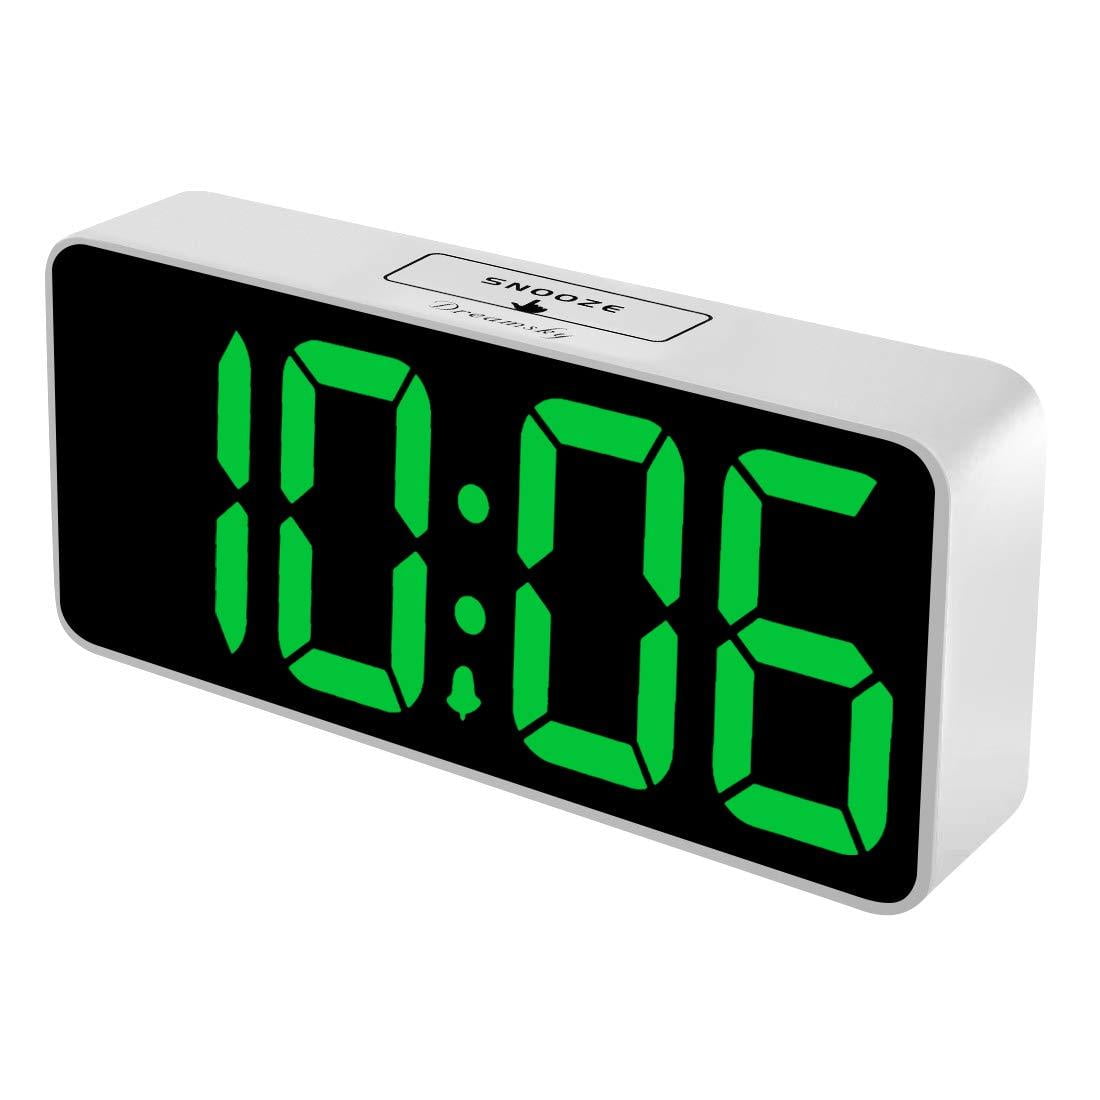 DreamSky Large Digital Alarm Clock with USB Port for Bedroom 